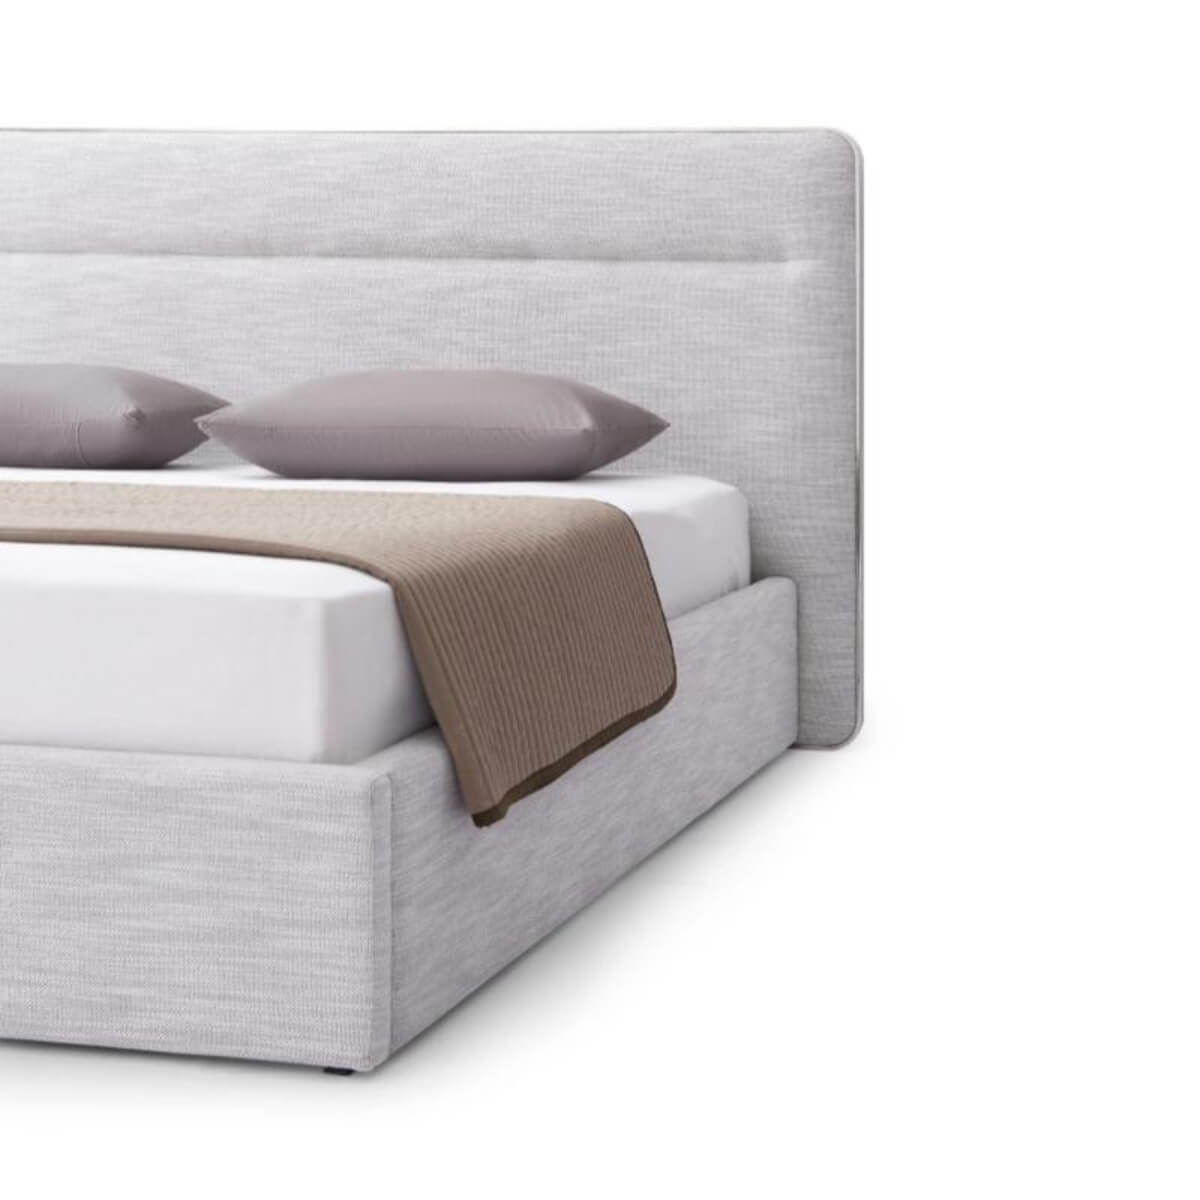 MidnightMuse Luxurious Cotton Linen Bed